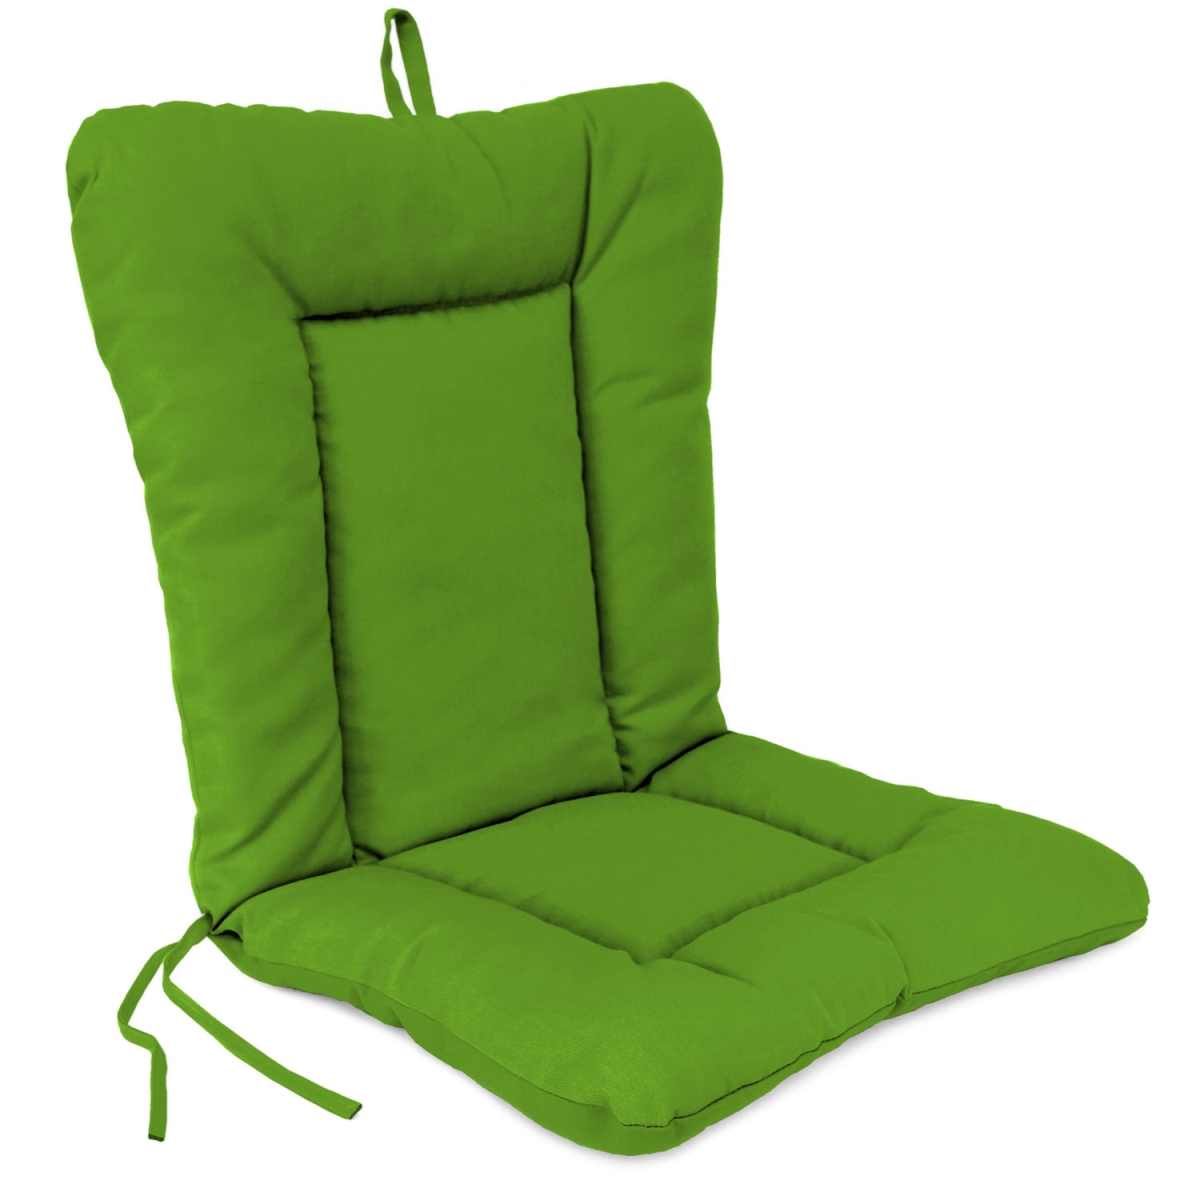 9040pk1-2543d Outdoor Euro Style Dining Chair Cushion, Veranda Citrus - 21 X 38 X 3.5 In.